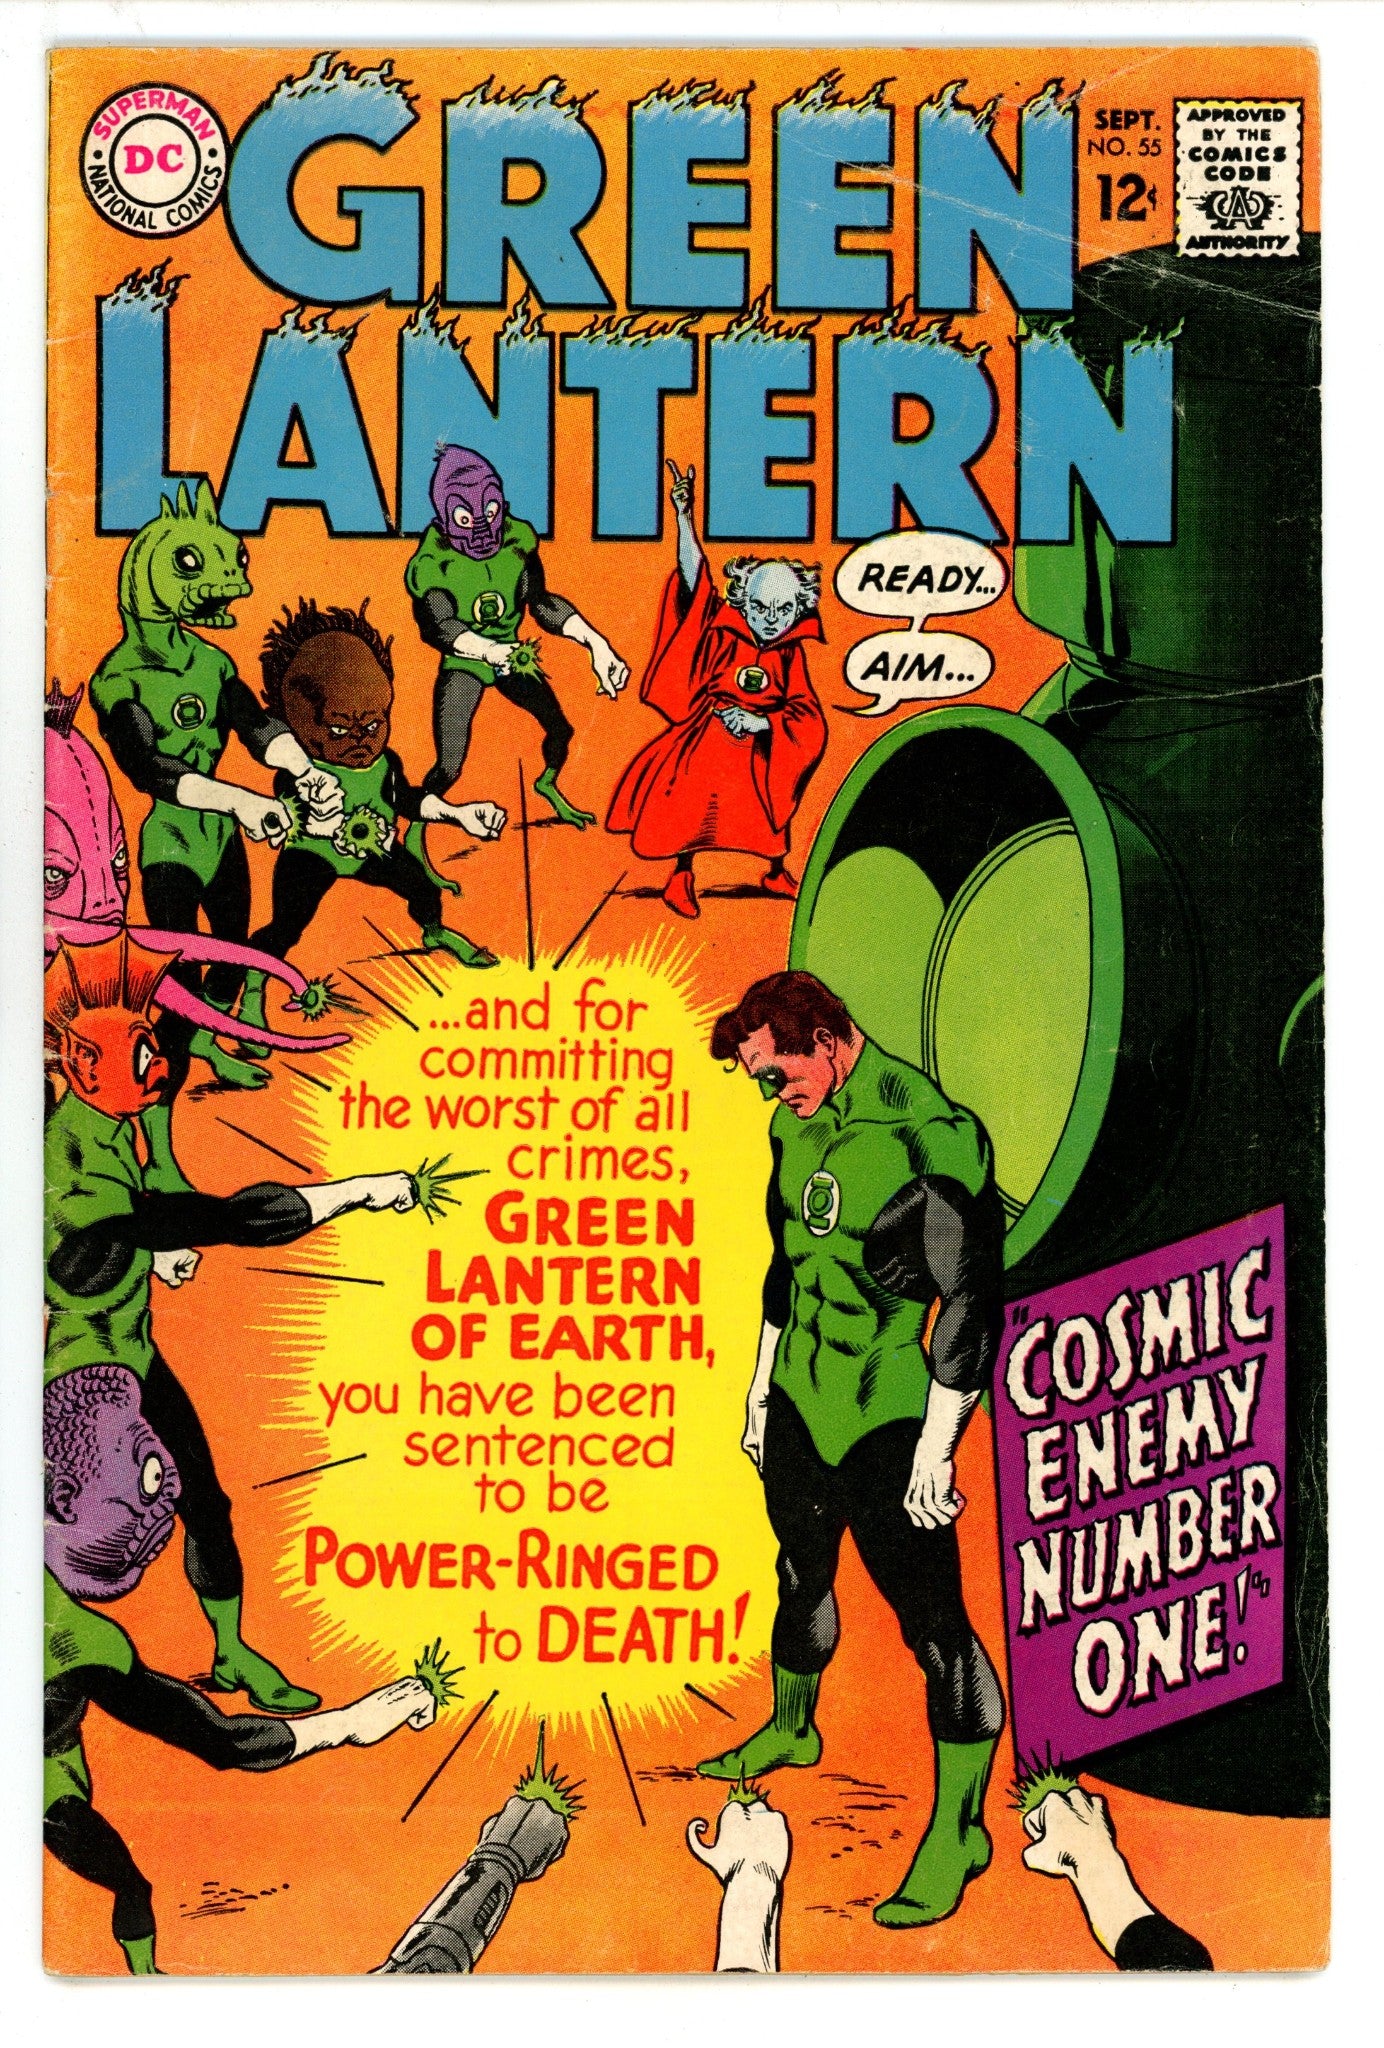 Green Lantern Vol 2 55 VG (4.0) (1967) 